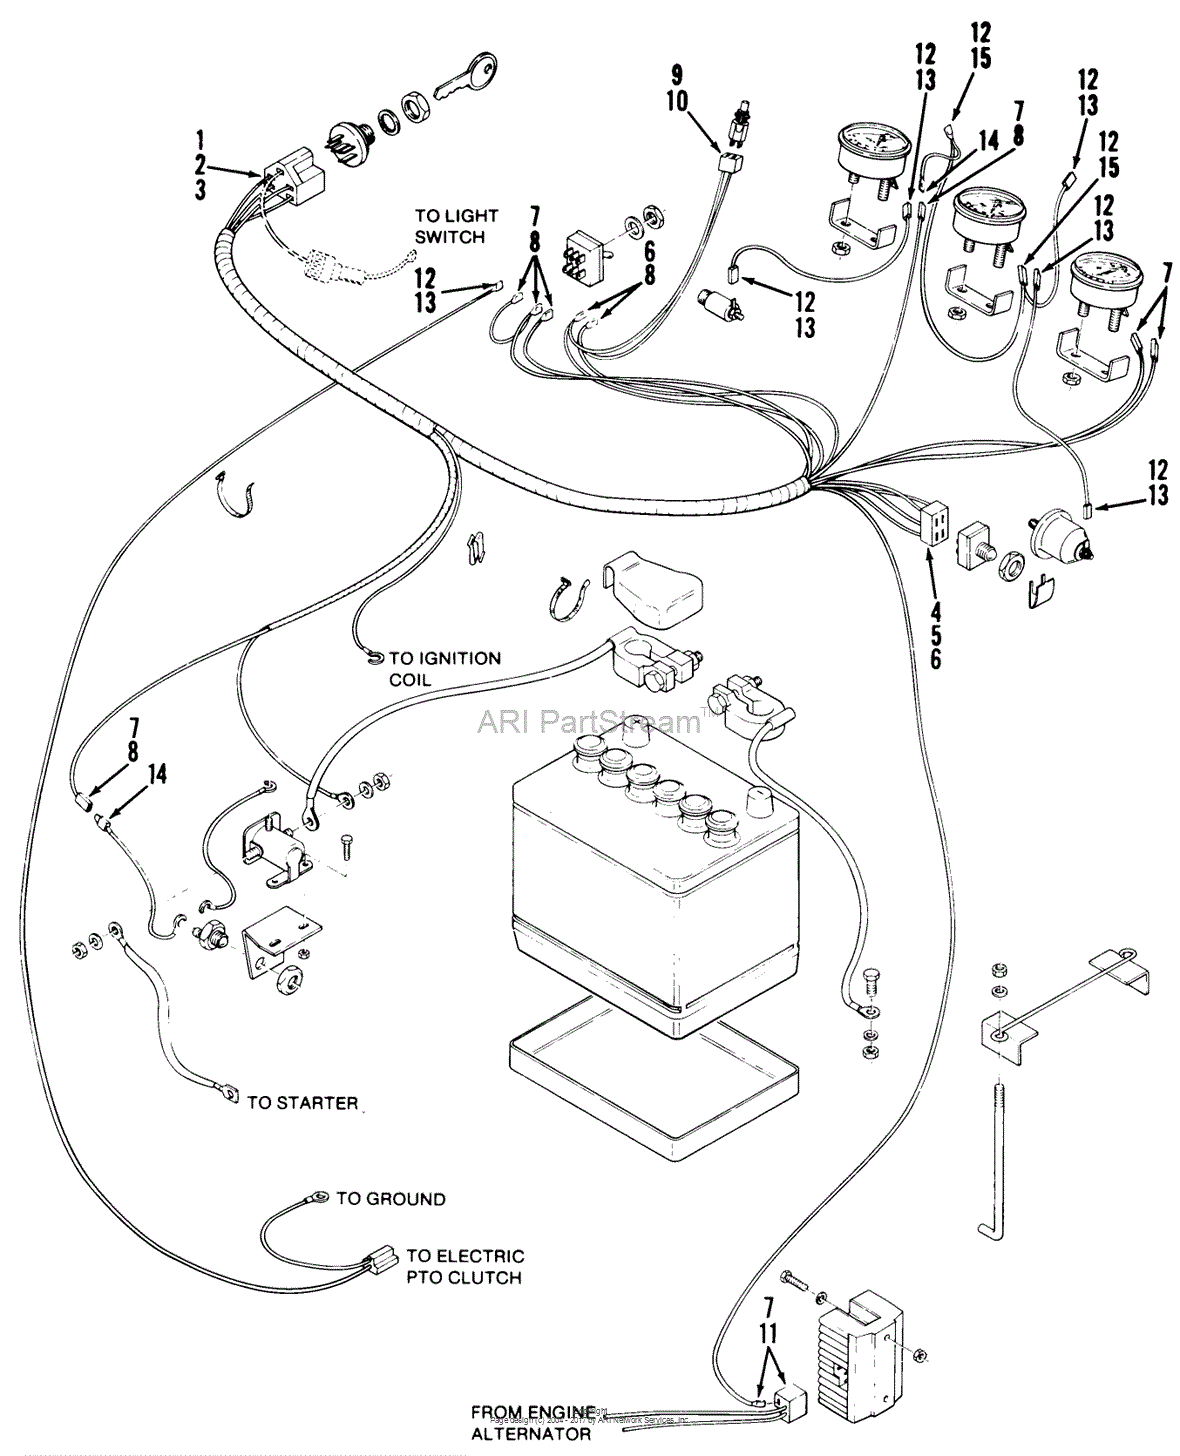 Wiring Diagram For Toro Wheel Horse